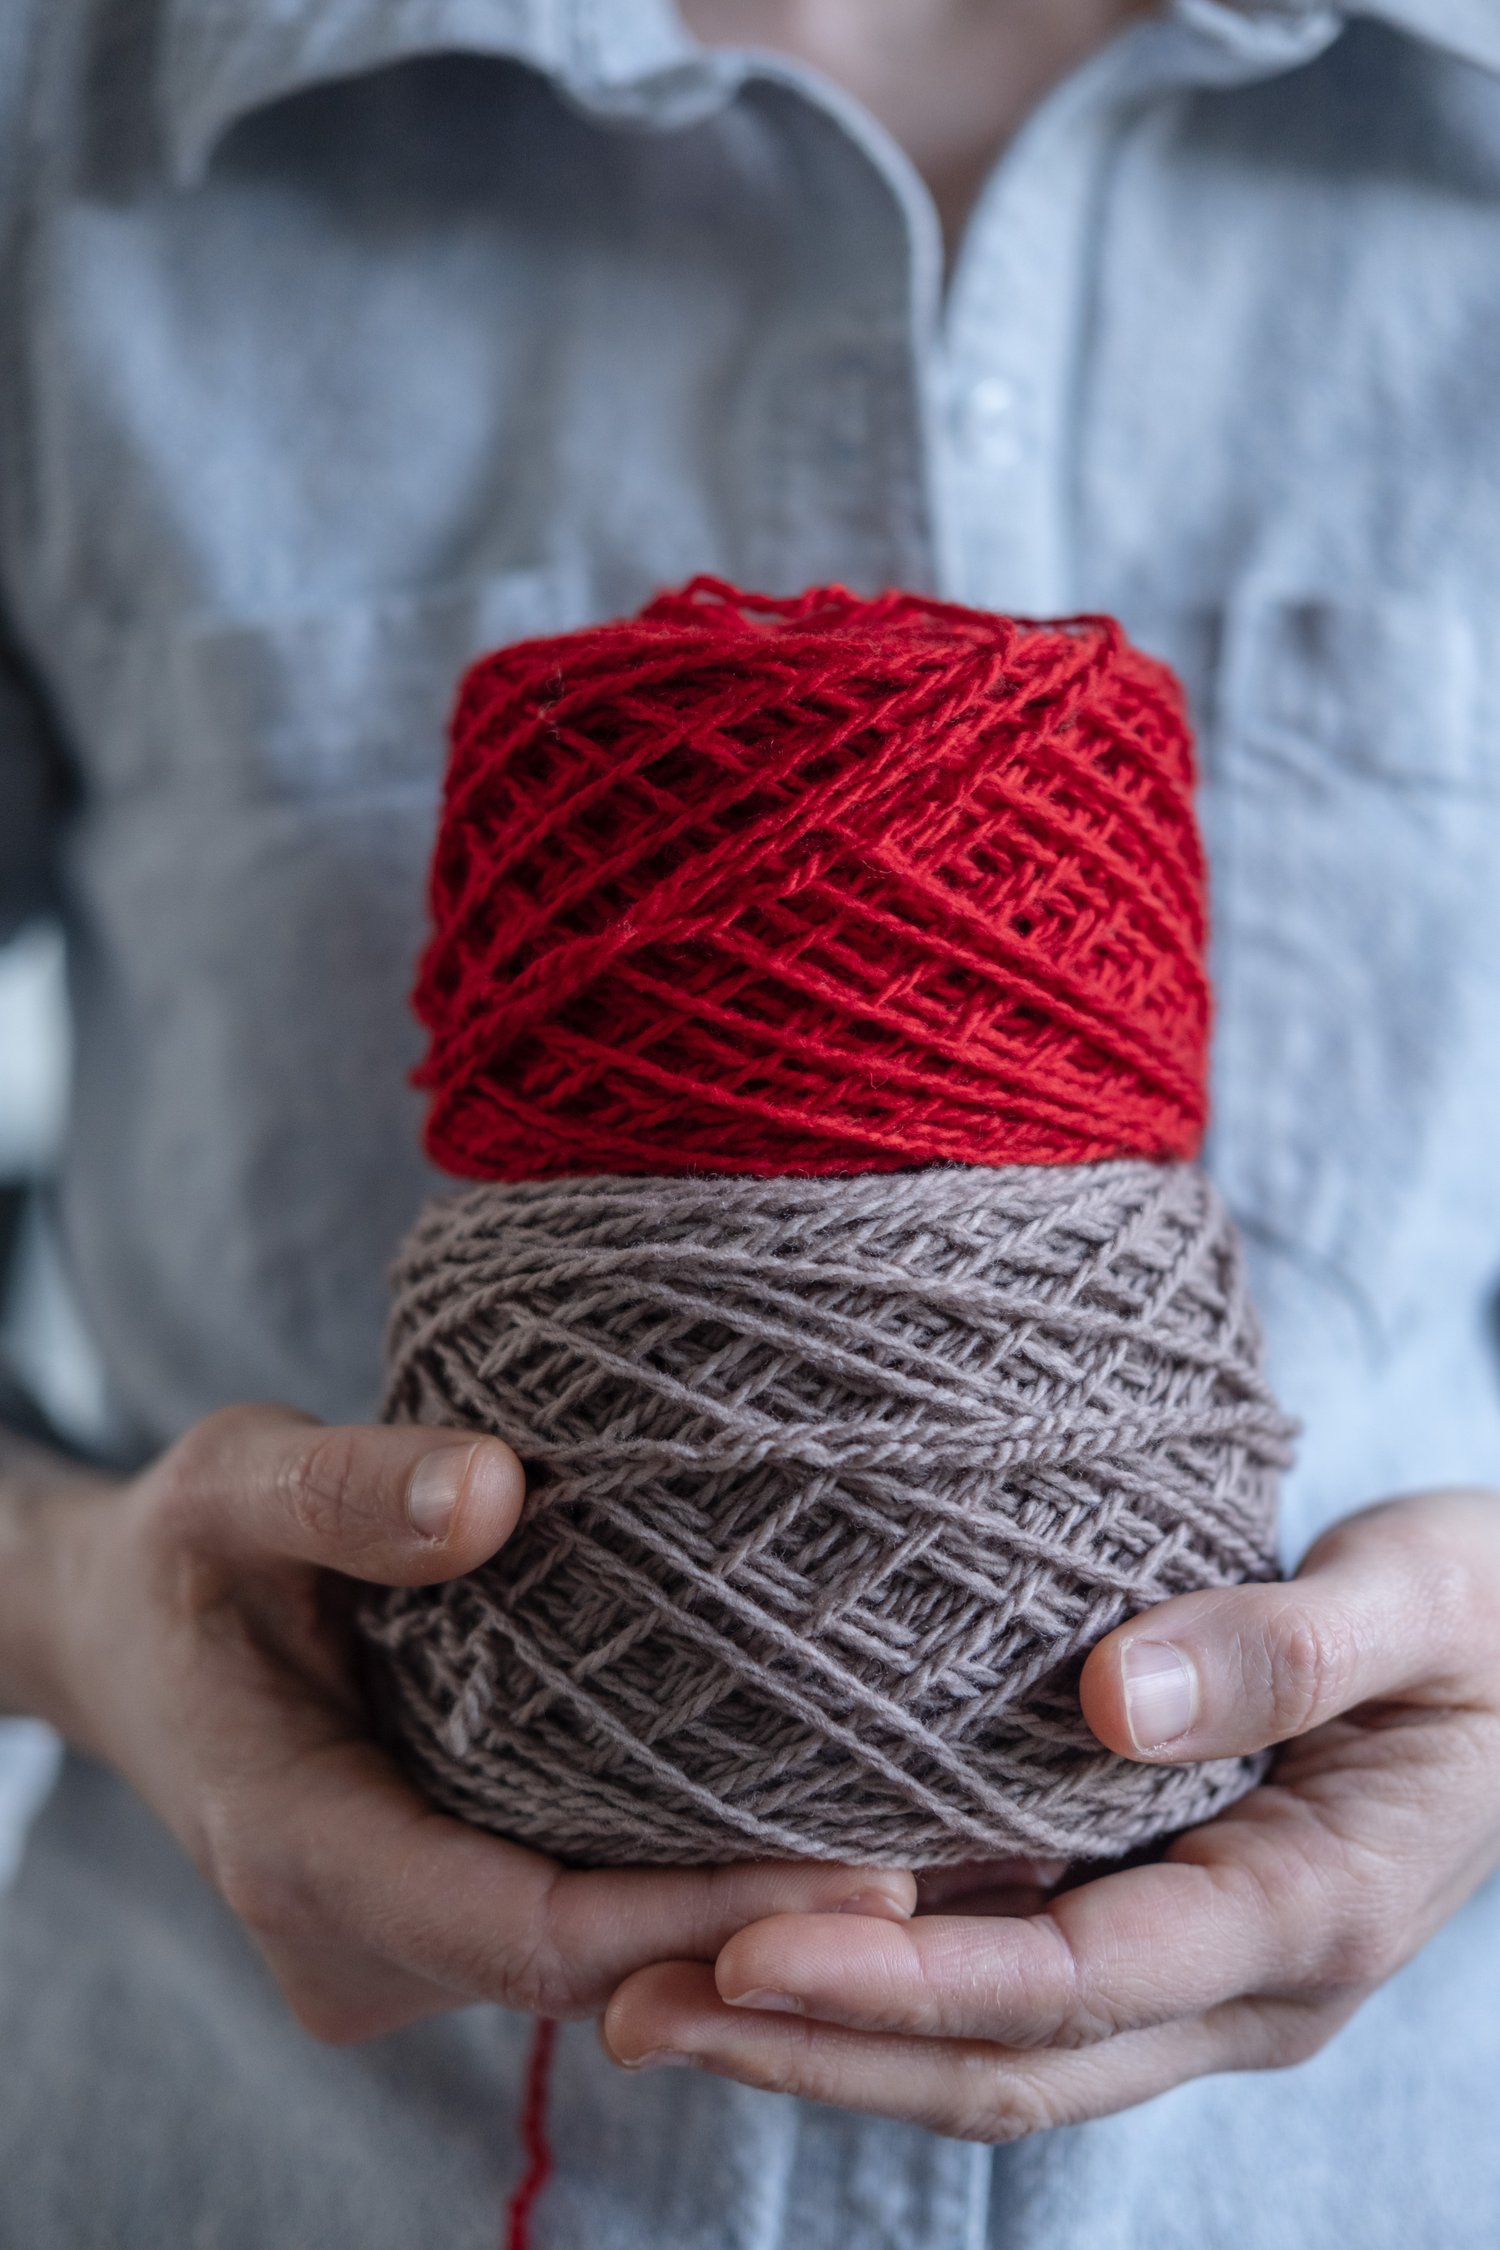 Red Recycled Hank Banana Yarn for Knitting Projects - Felt & Yarn